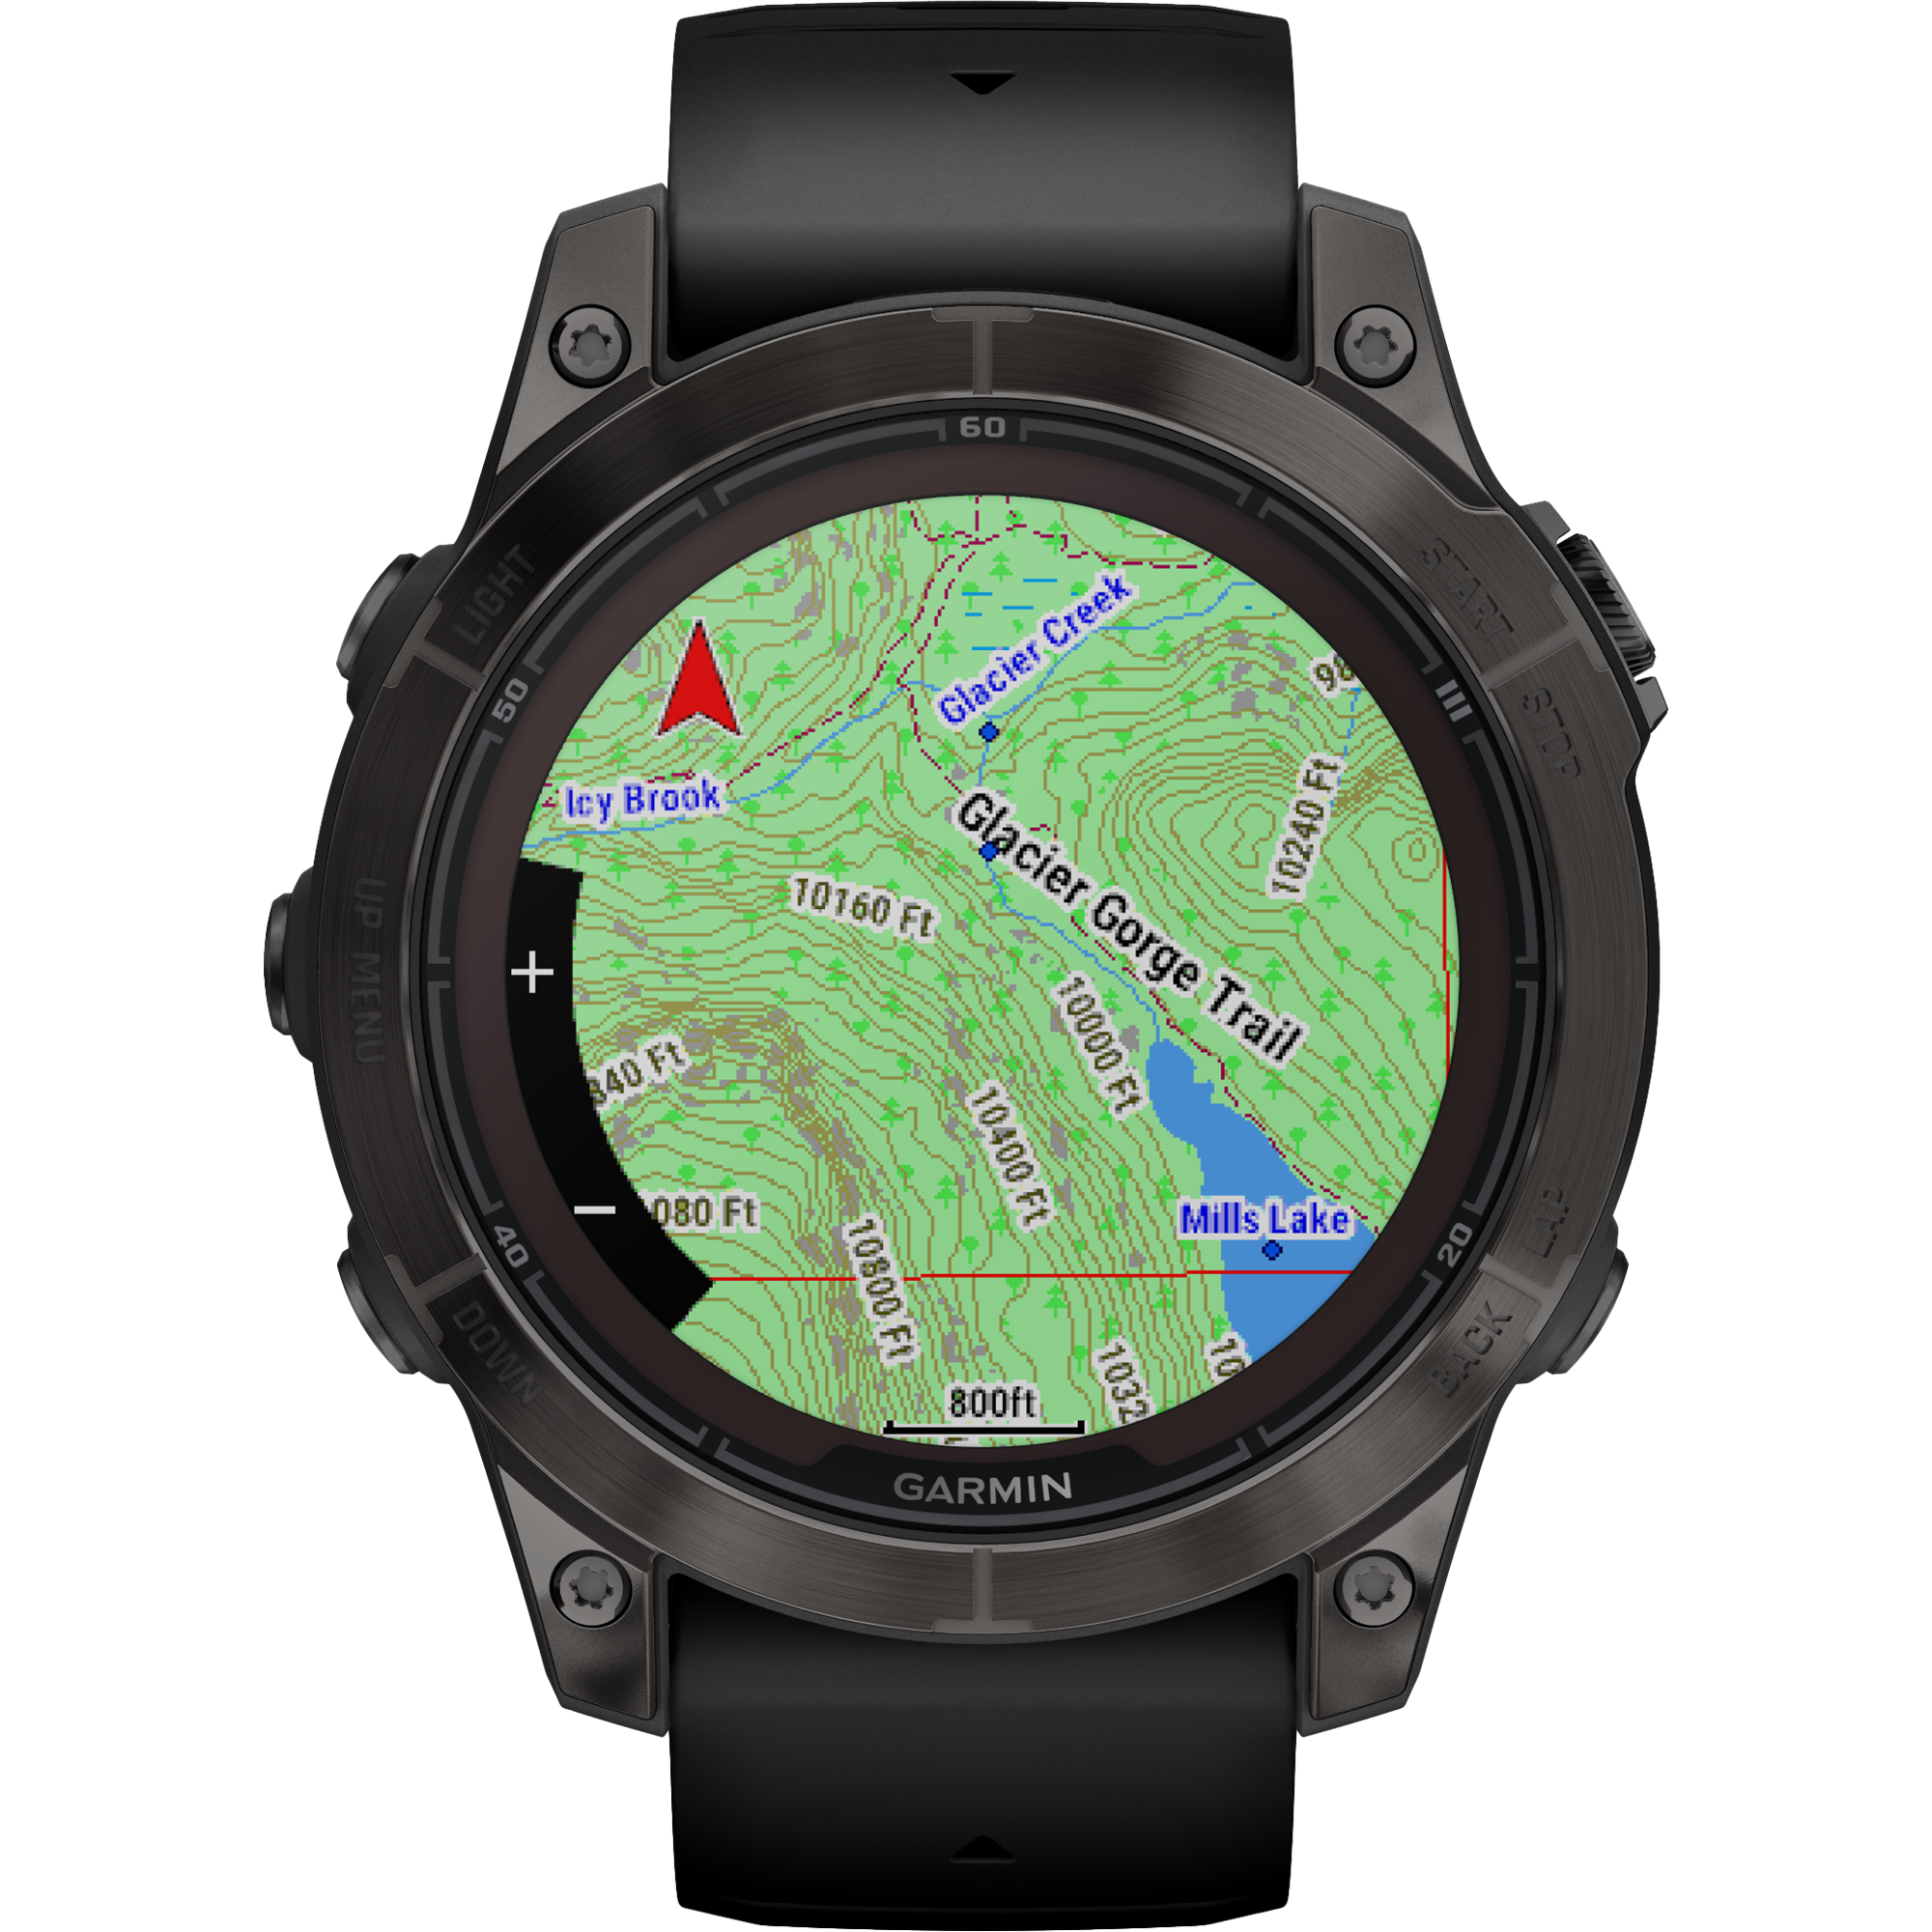 Garmin Fenix 7 vs COROS Vertix 2: New York City GPS Accuracy Test!